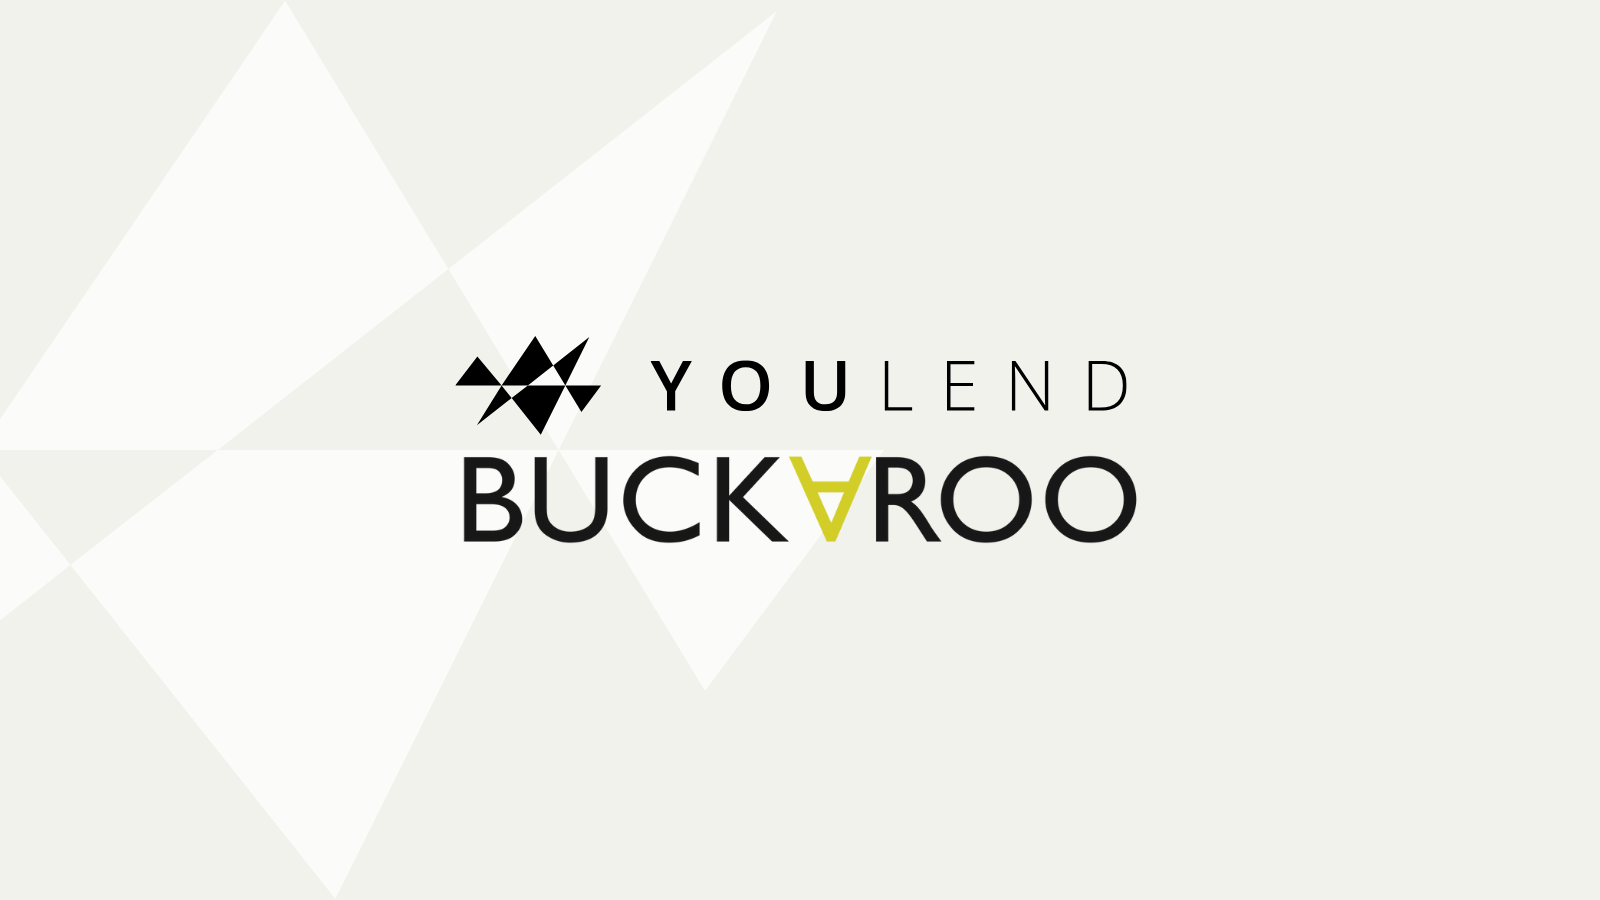 Buckaroo YouLend